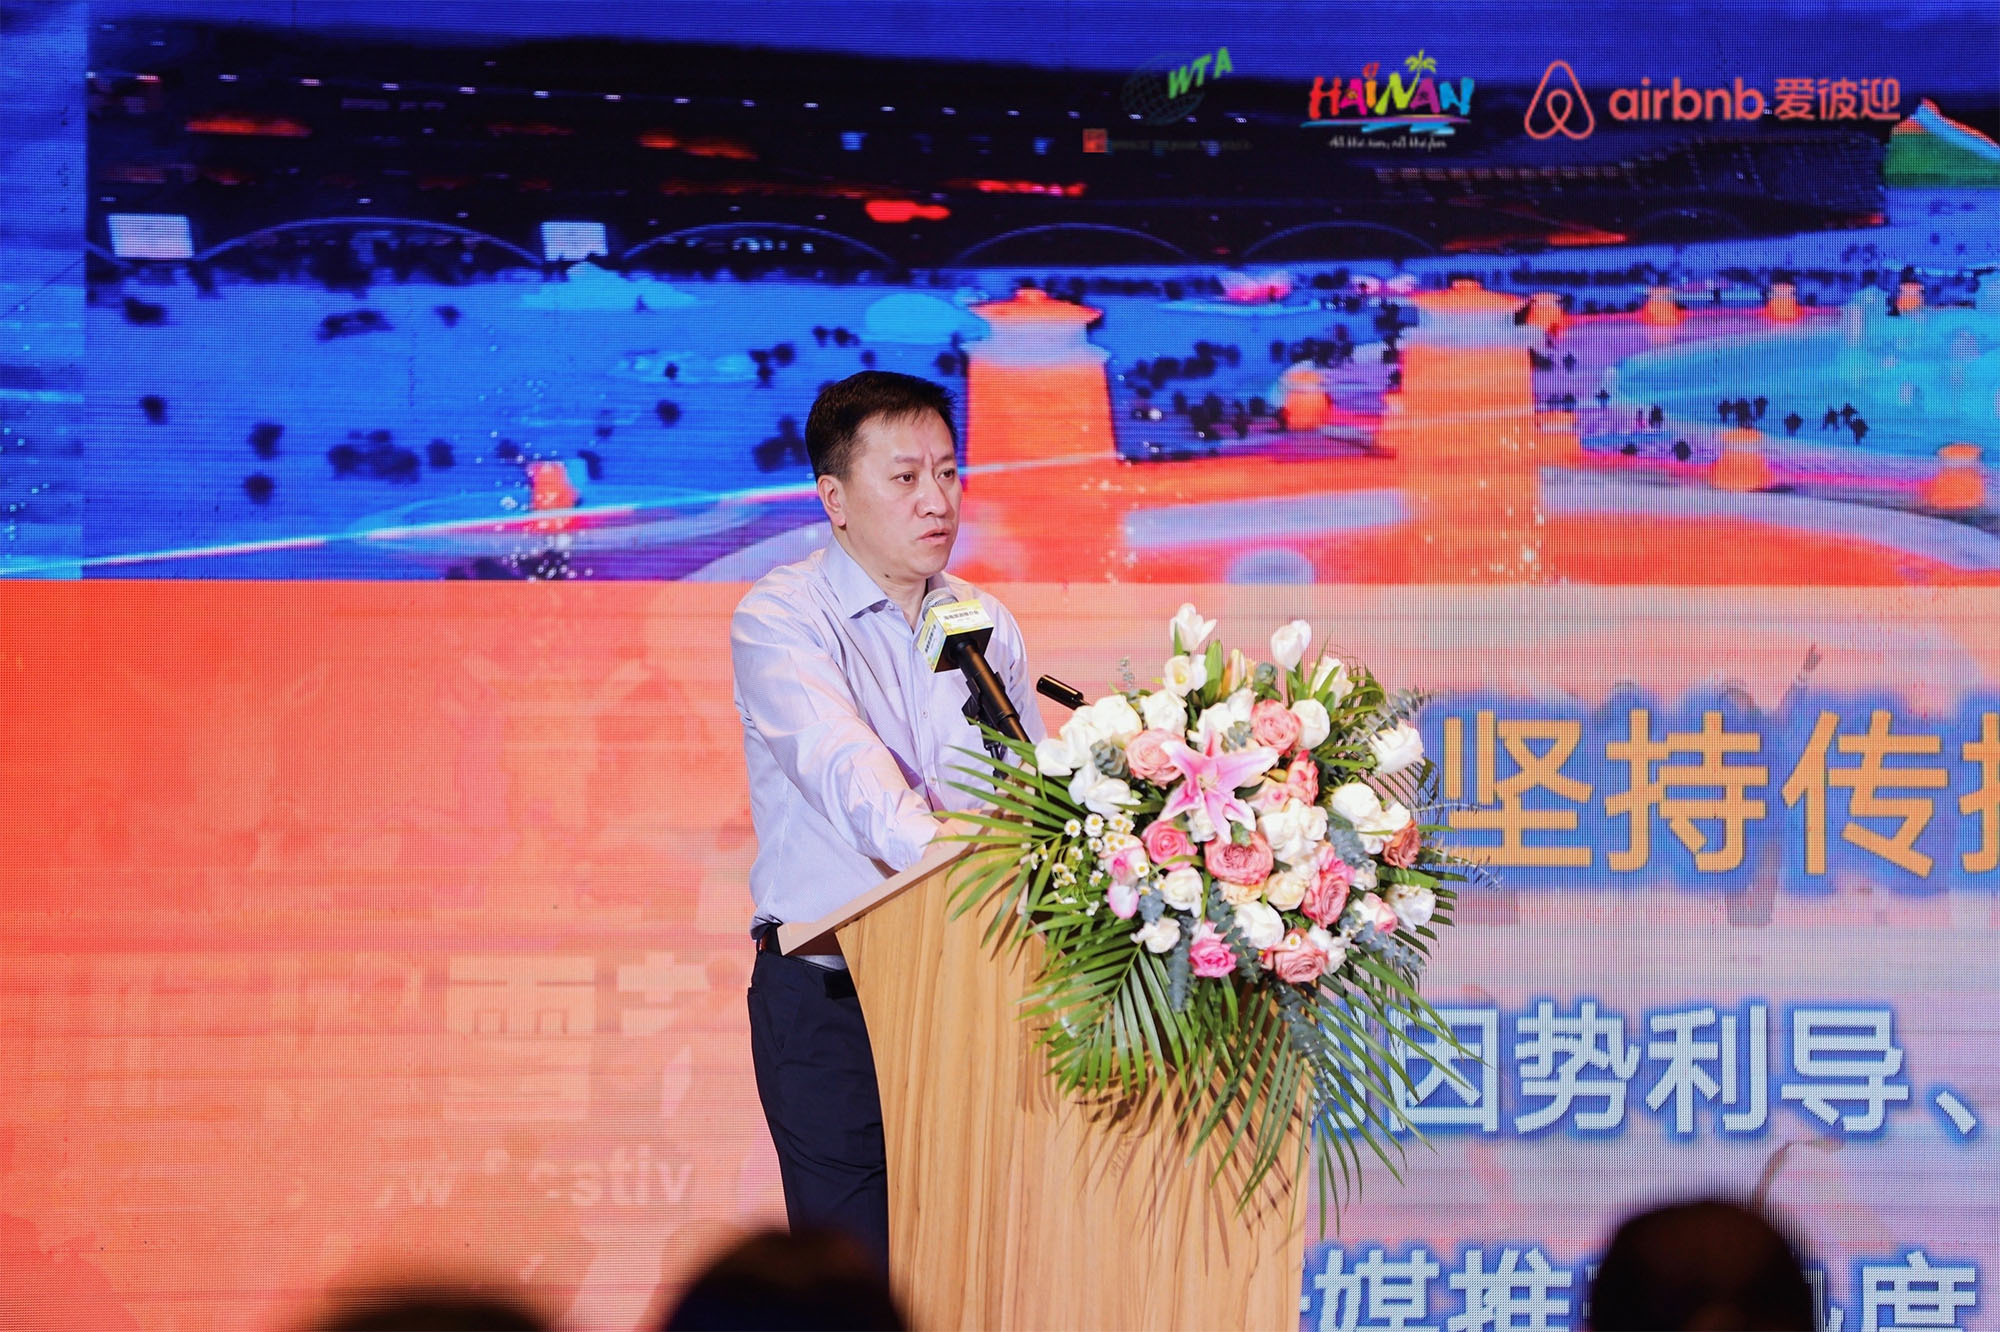 LIU Xuelin from the Harbin Cultural Broadcasting and Tourism Bureau